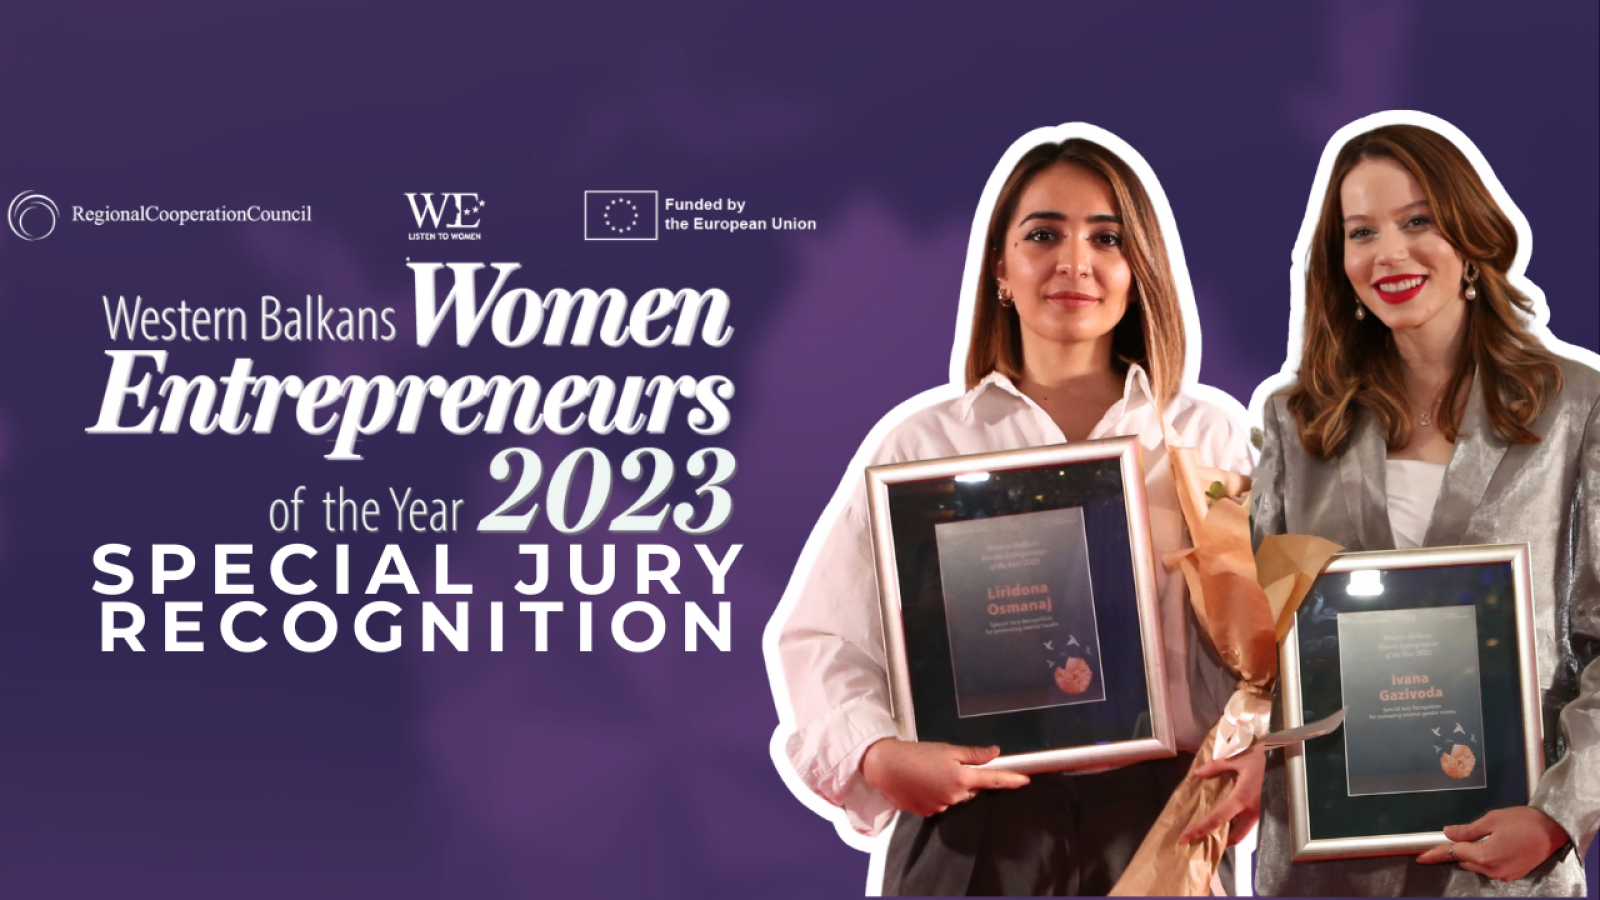 Meet Liridona Osmanaj & Ivana Gazivoda WB Women Entrepreneurs Special Jury Recognition recipients